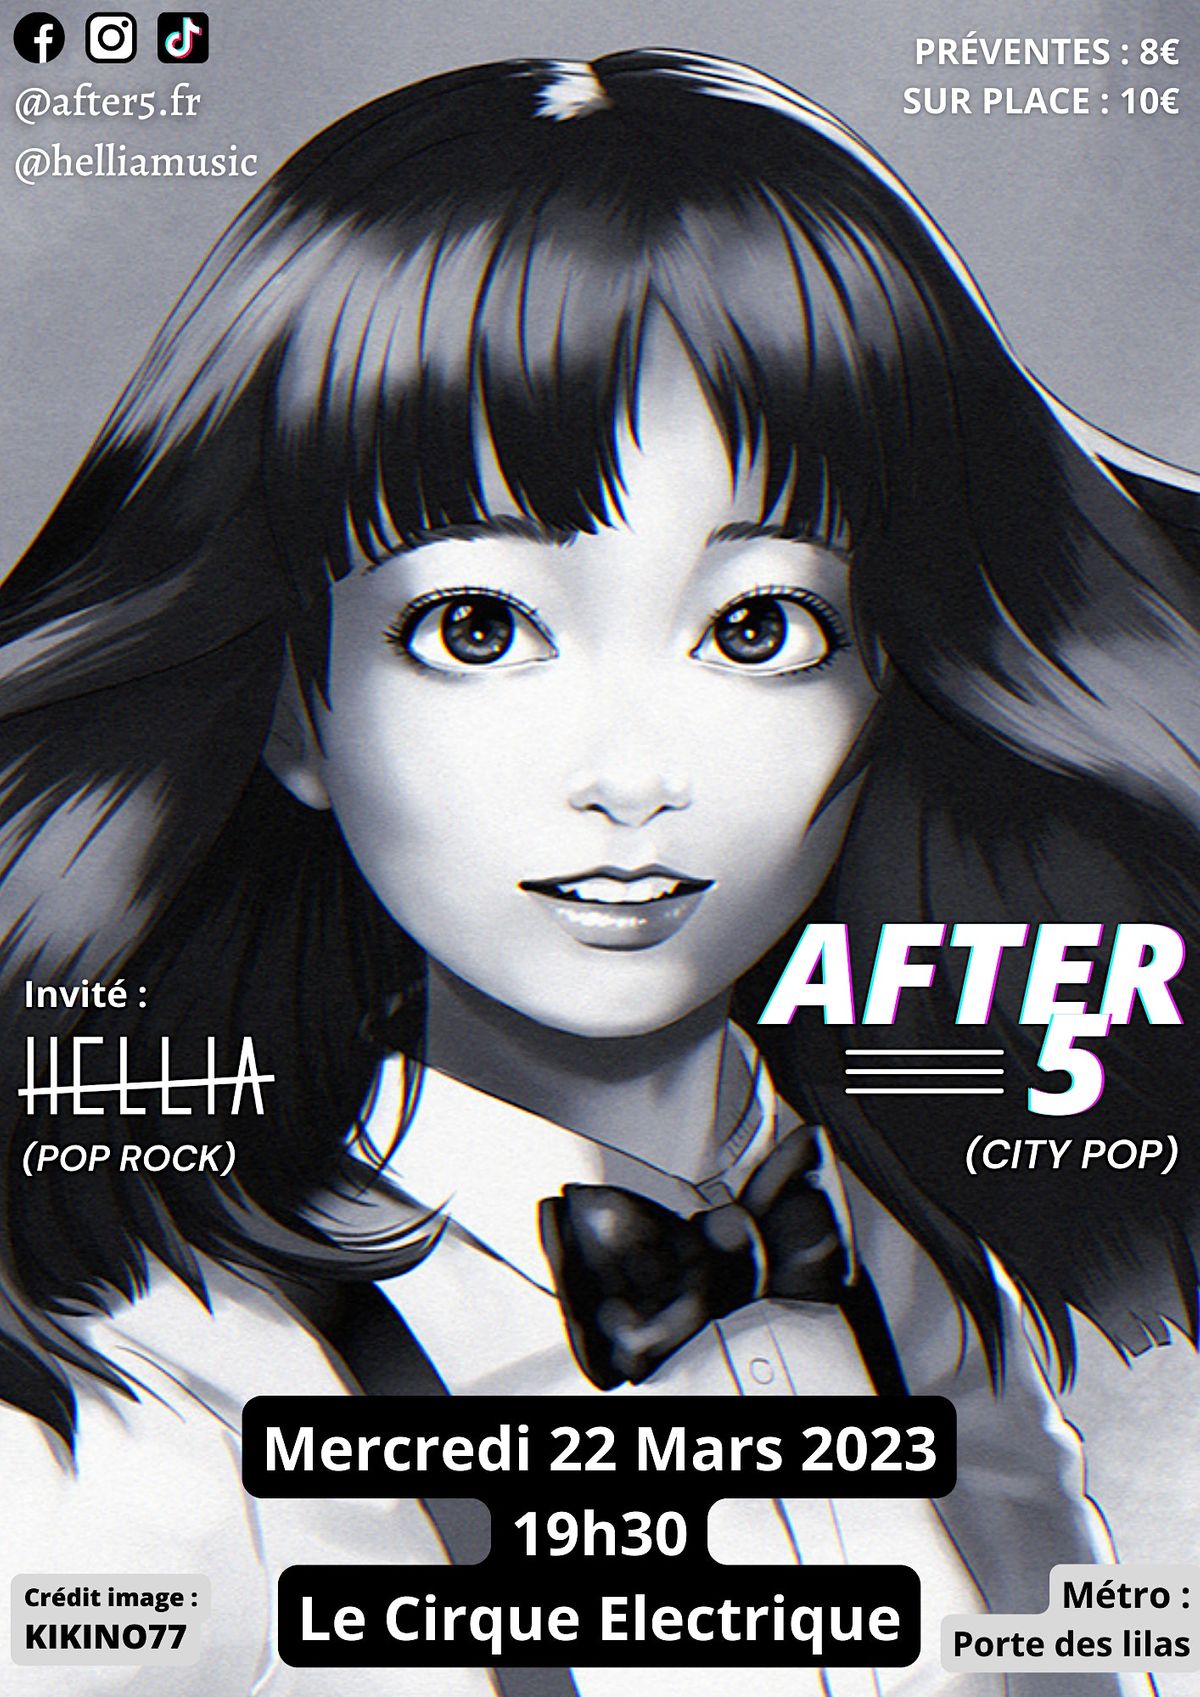 AFTER 5 (City-Pop) + HELLIA (Pop-Rock)